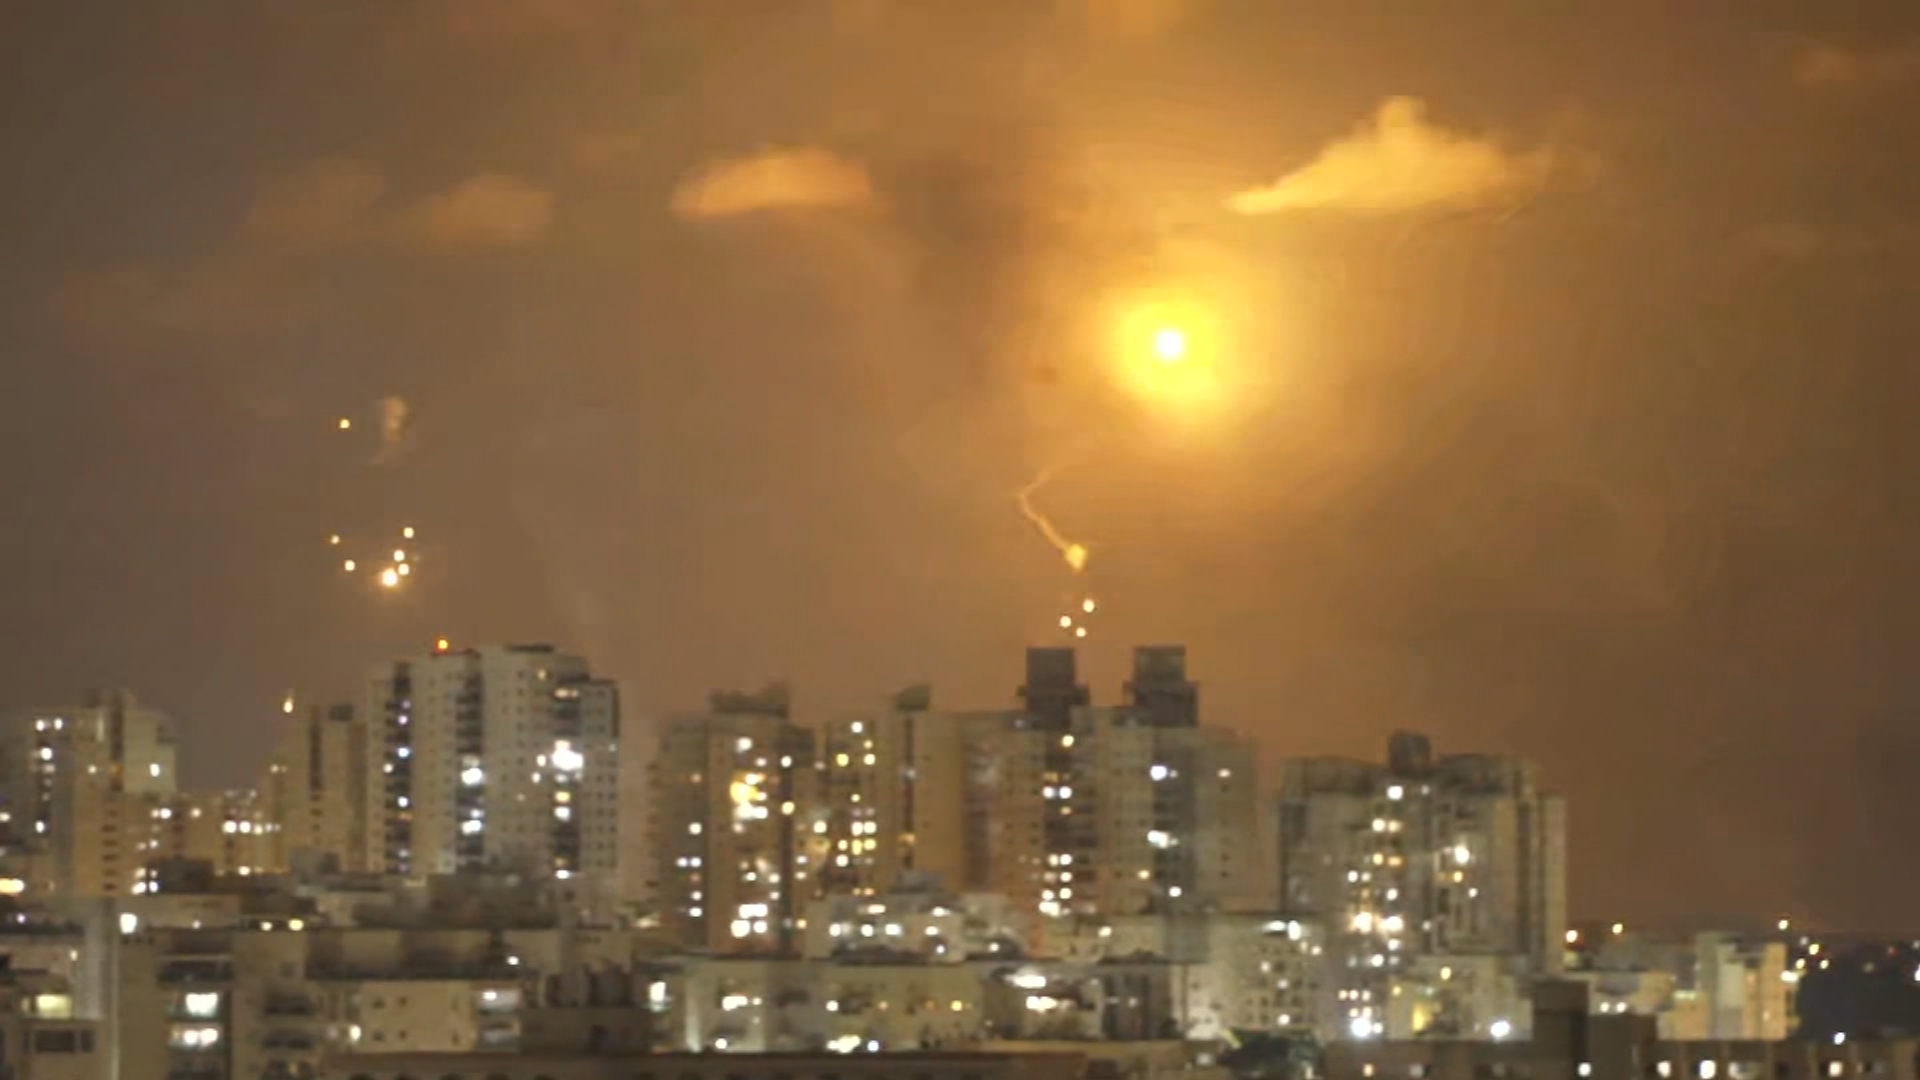 Indianapolis native in Israel recounts horror from Tel Aviv bombings